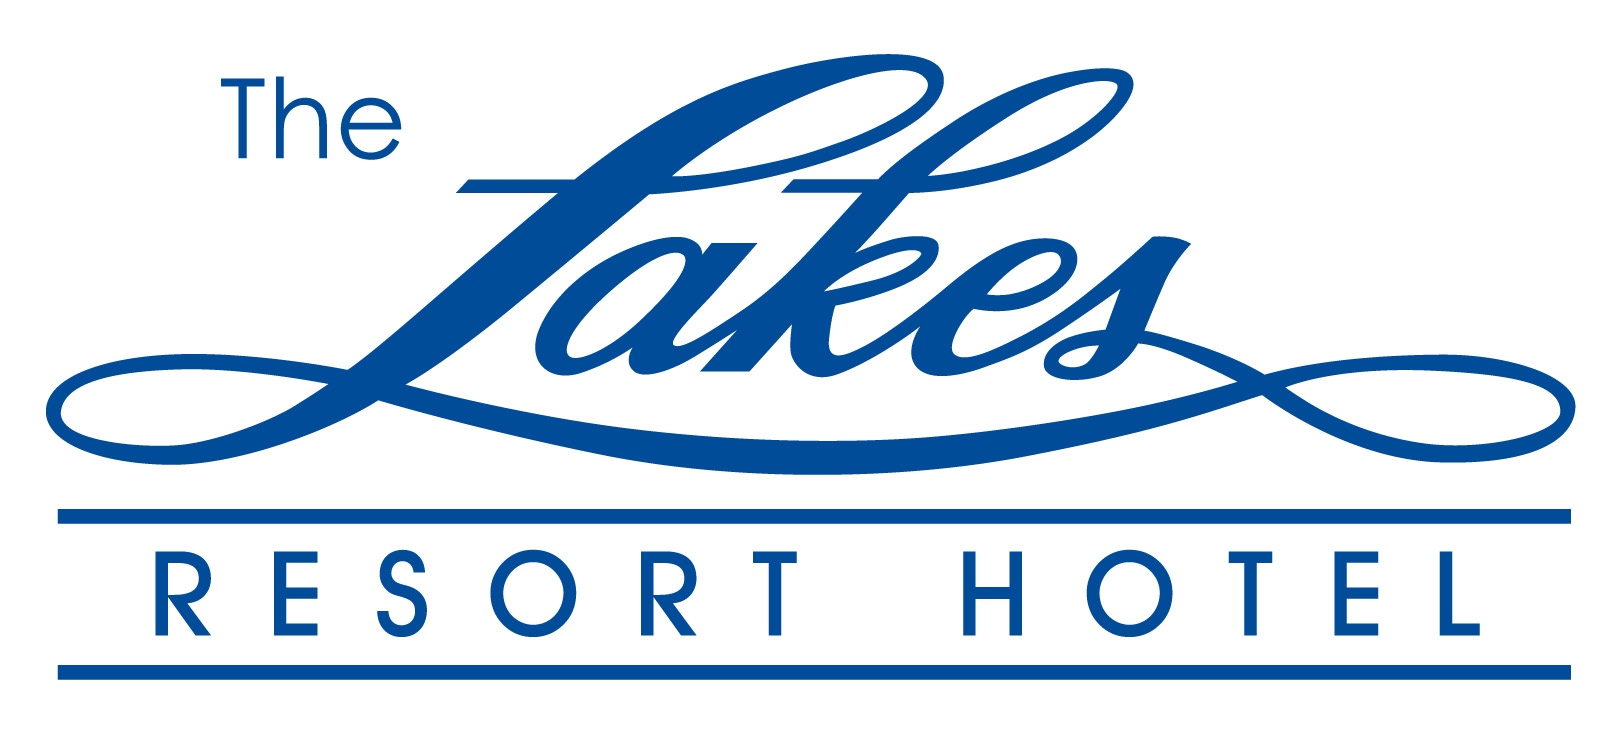 Lakes Resort Hotel - Geraldton Accommodation